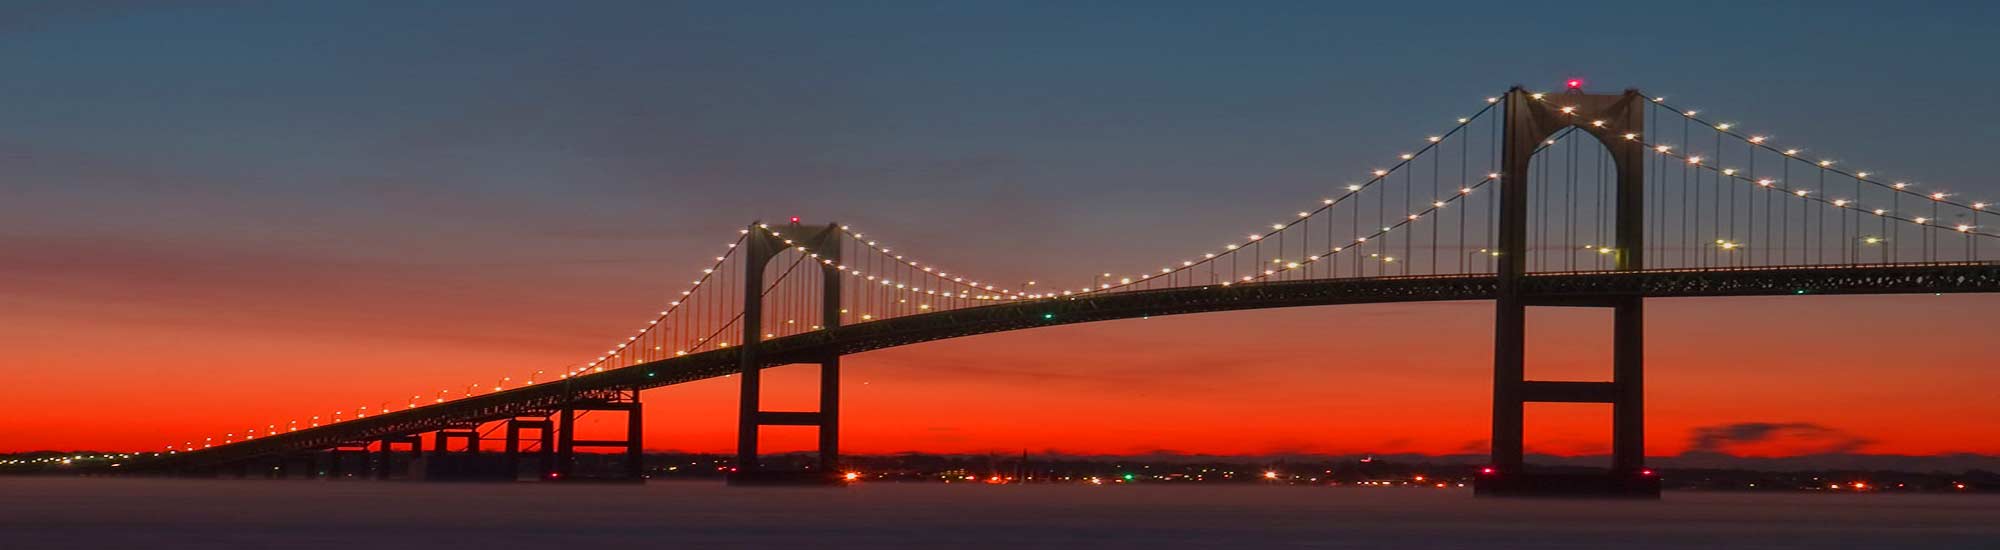 take in amazing views of the newport bridge at sunset